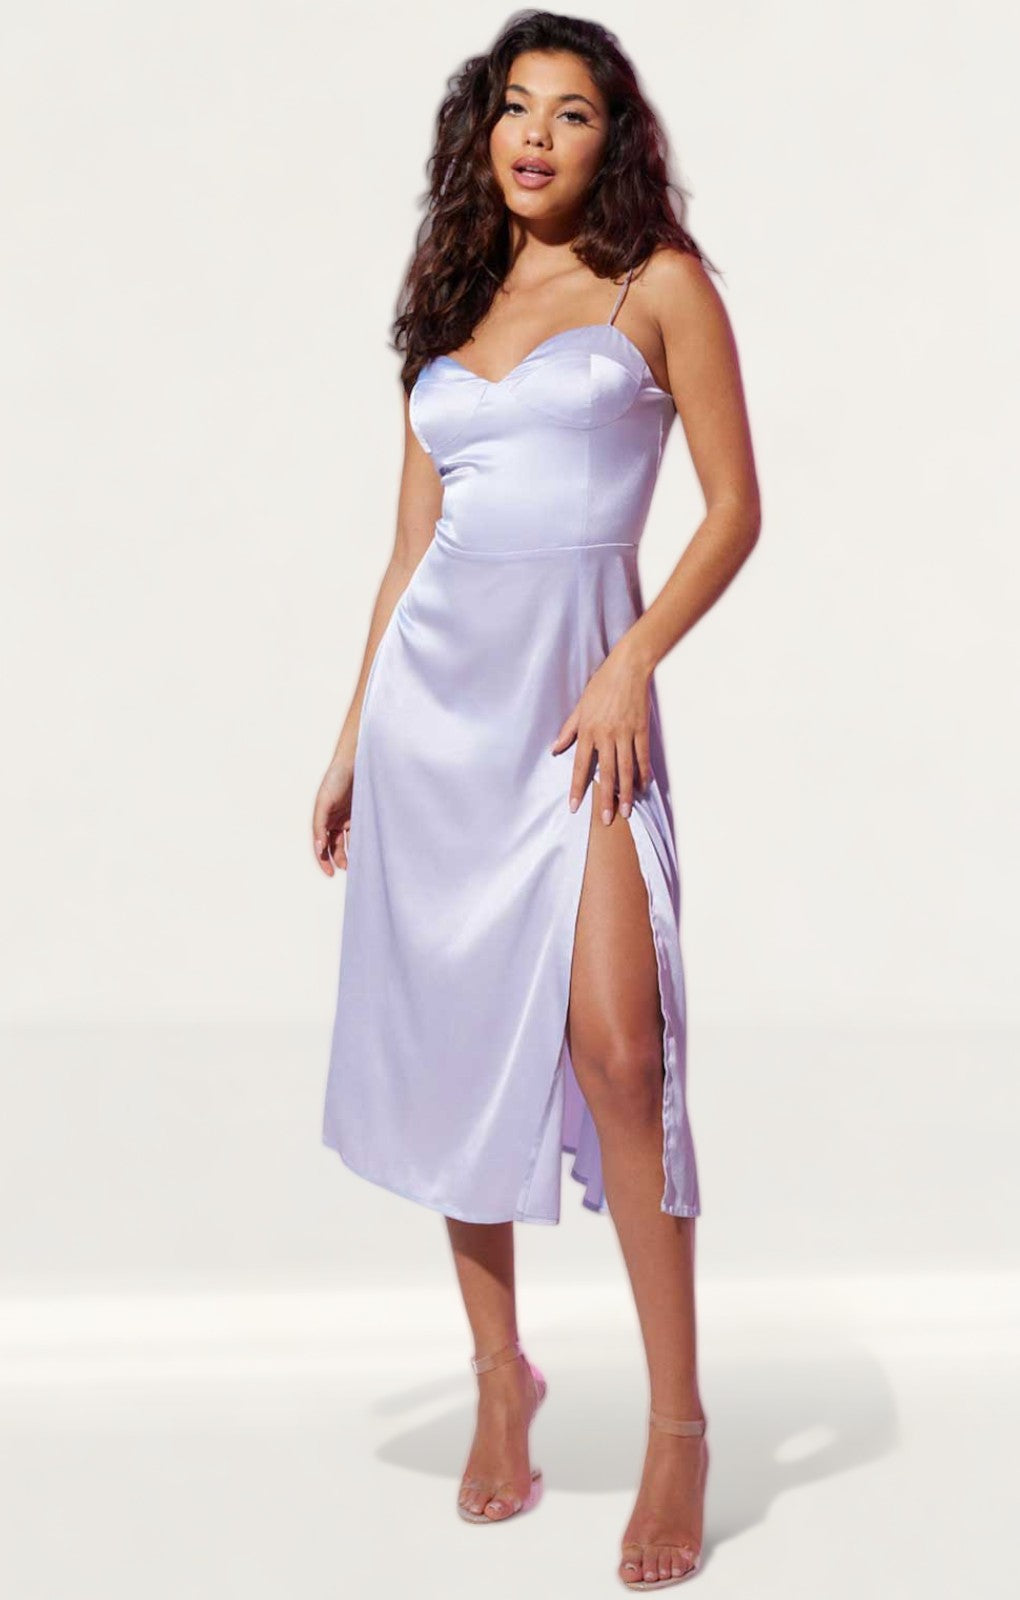 Samsara Lilac Valentina Dress in Recycled Satin product image